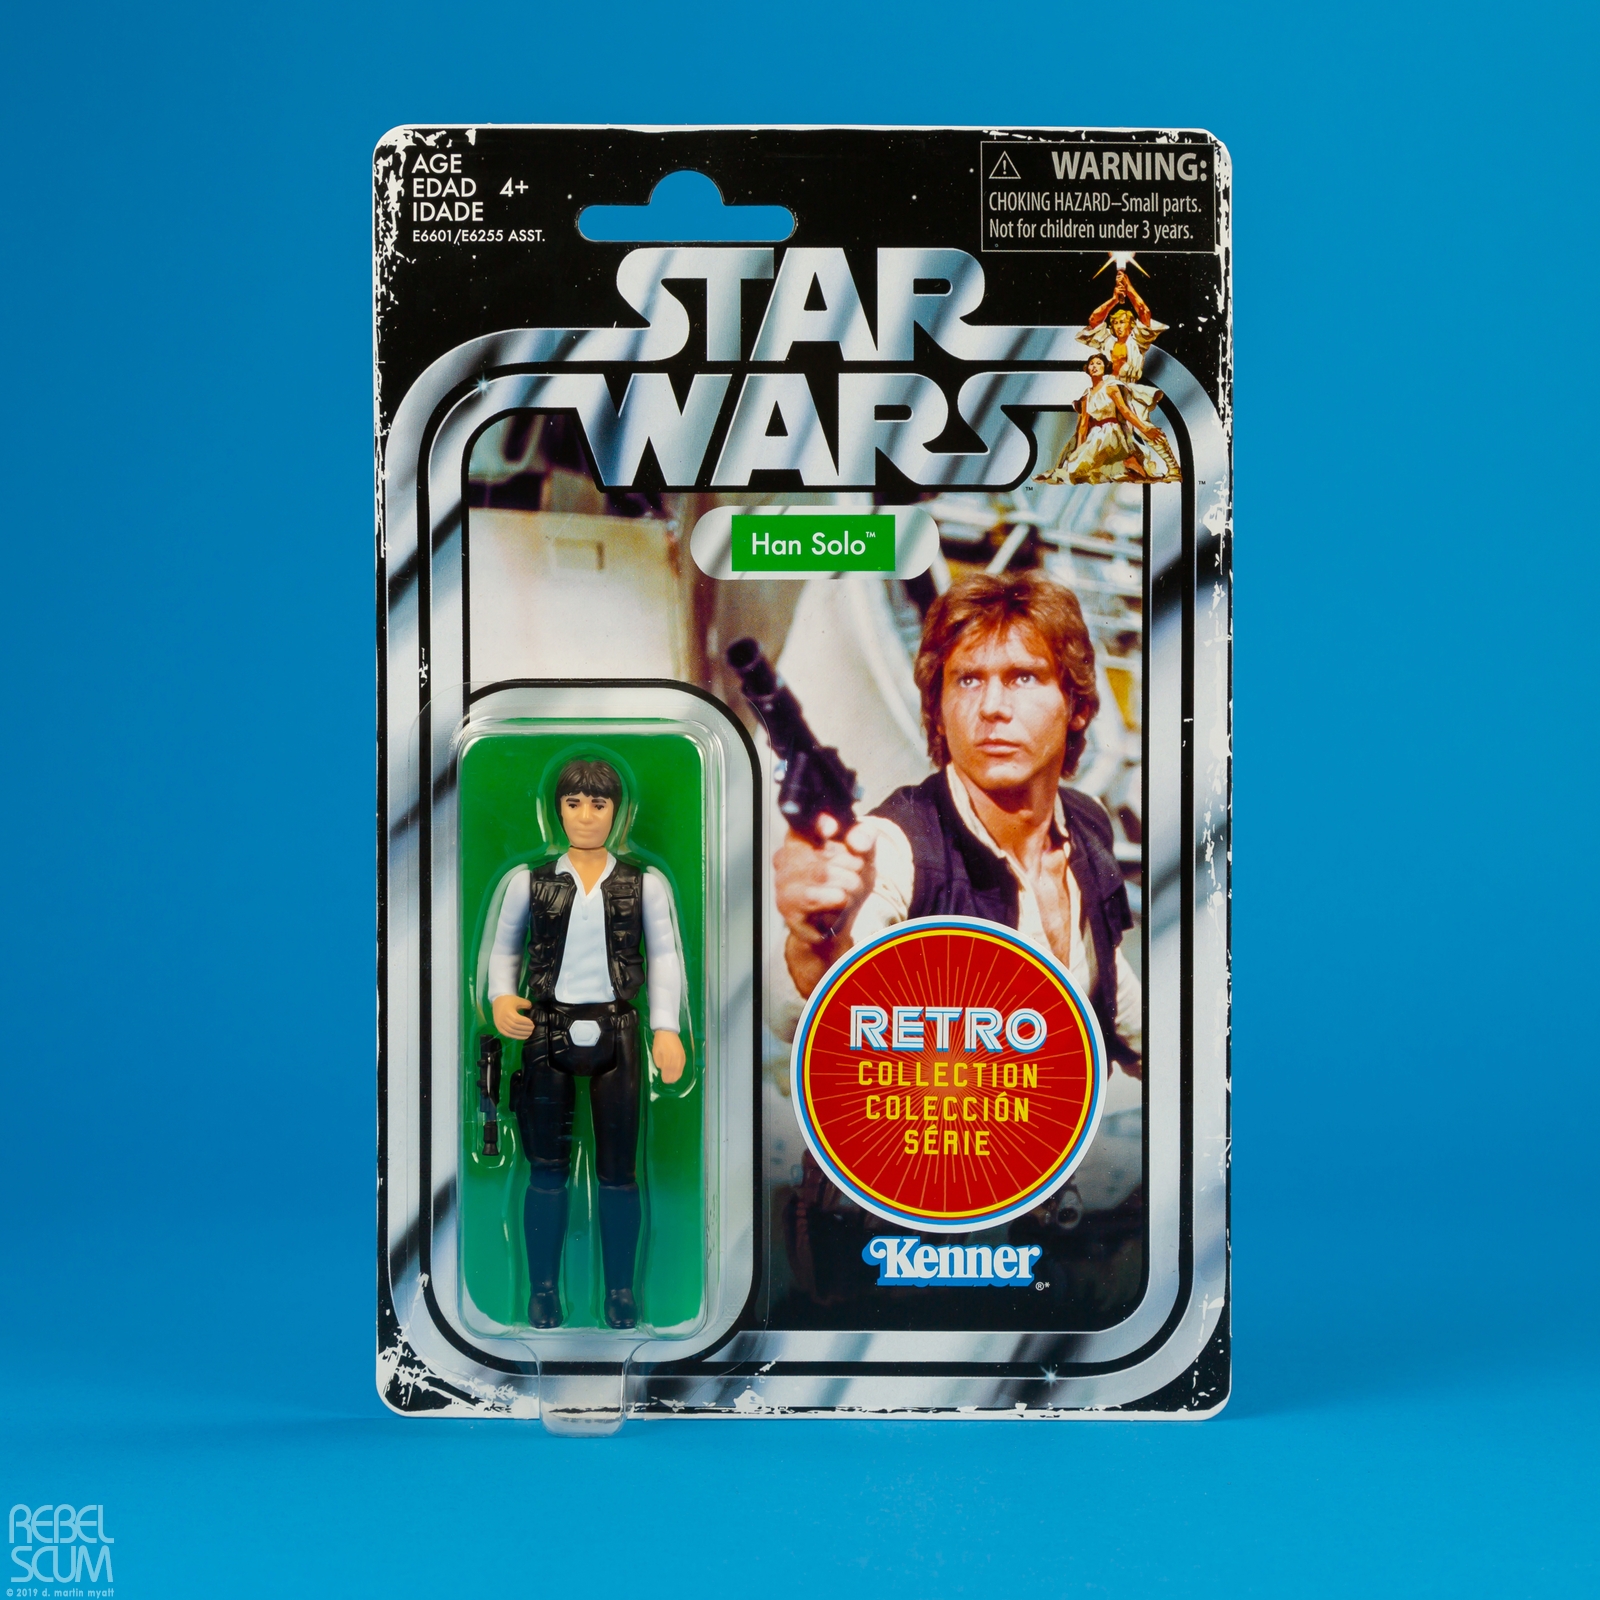 The-Retro-Collection-Early-Bird-Kenner-Hasbro-Star-Wars-083.jpg